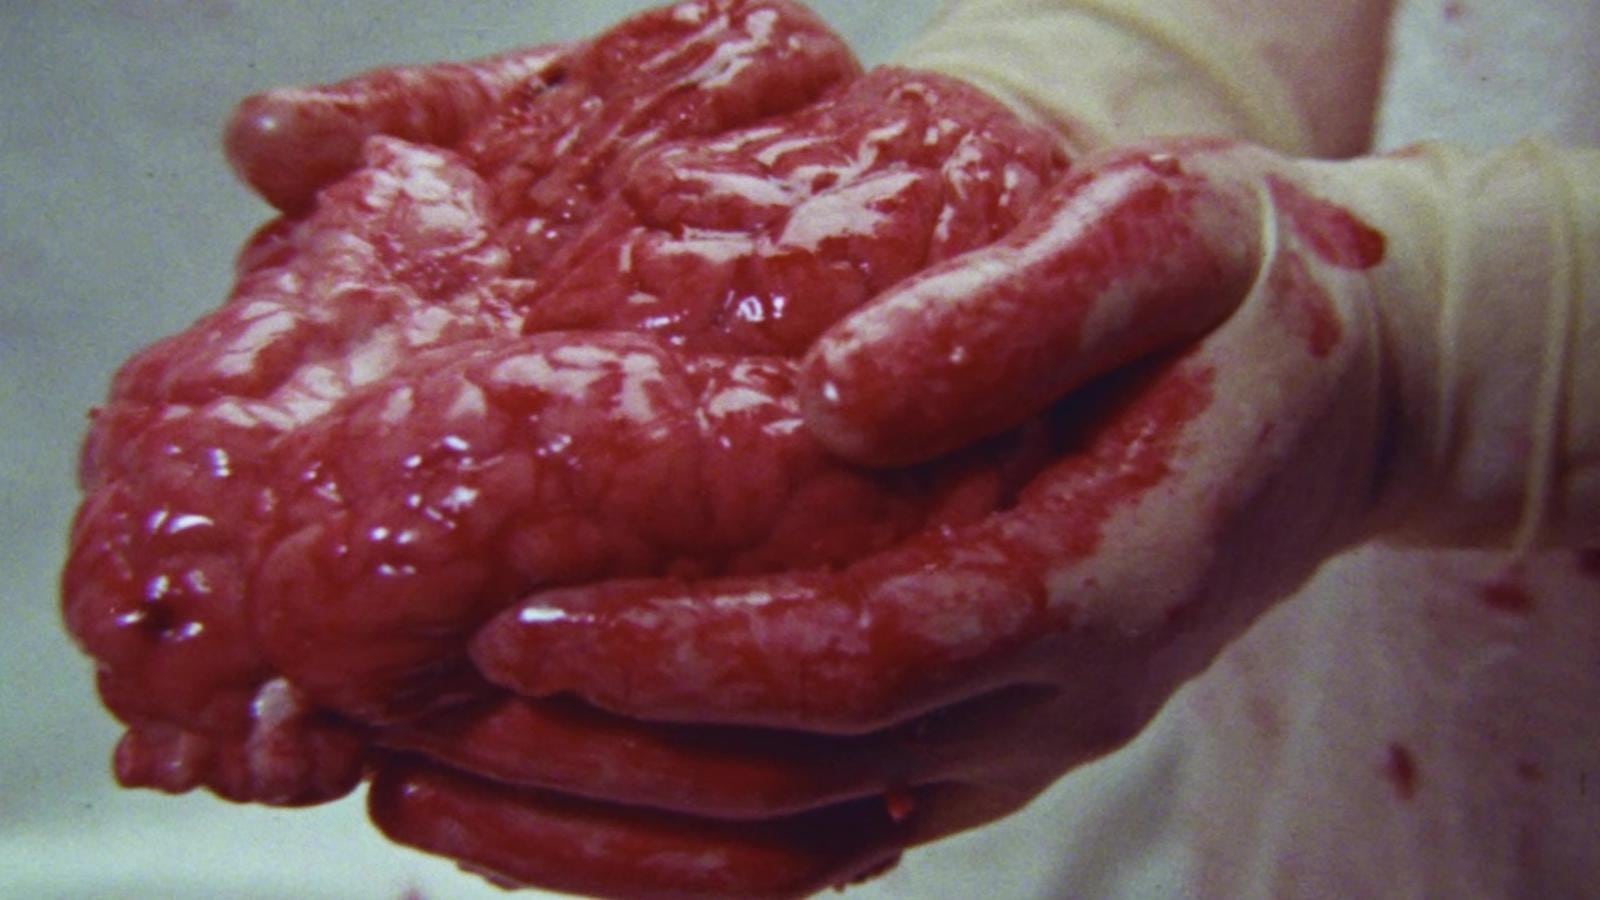 Brain of Blood (1971)